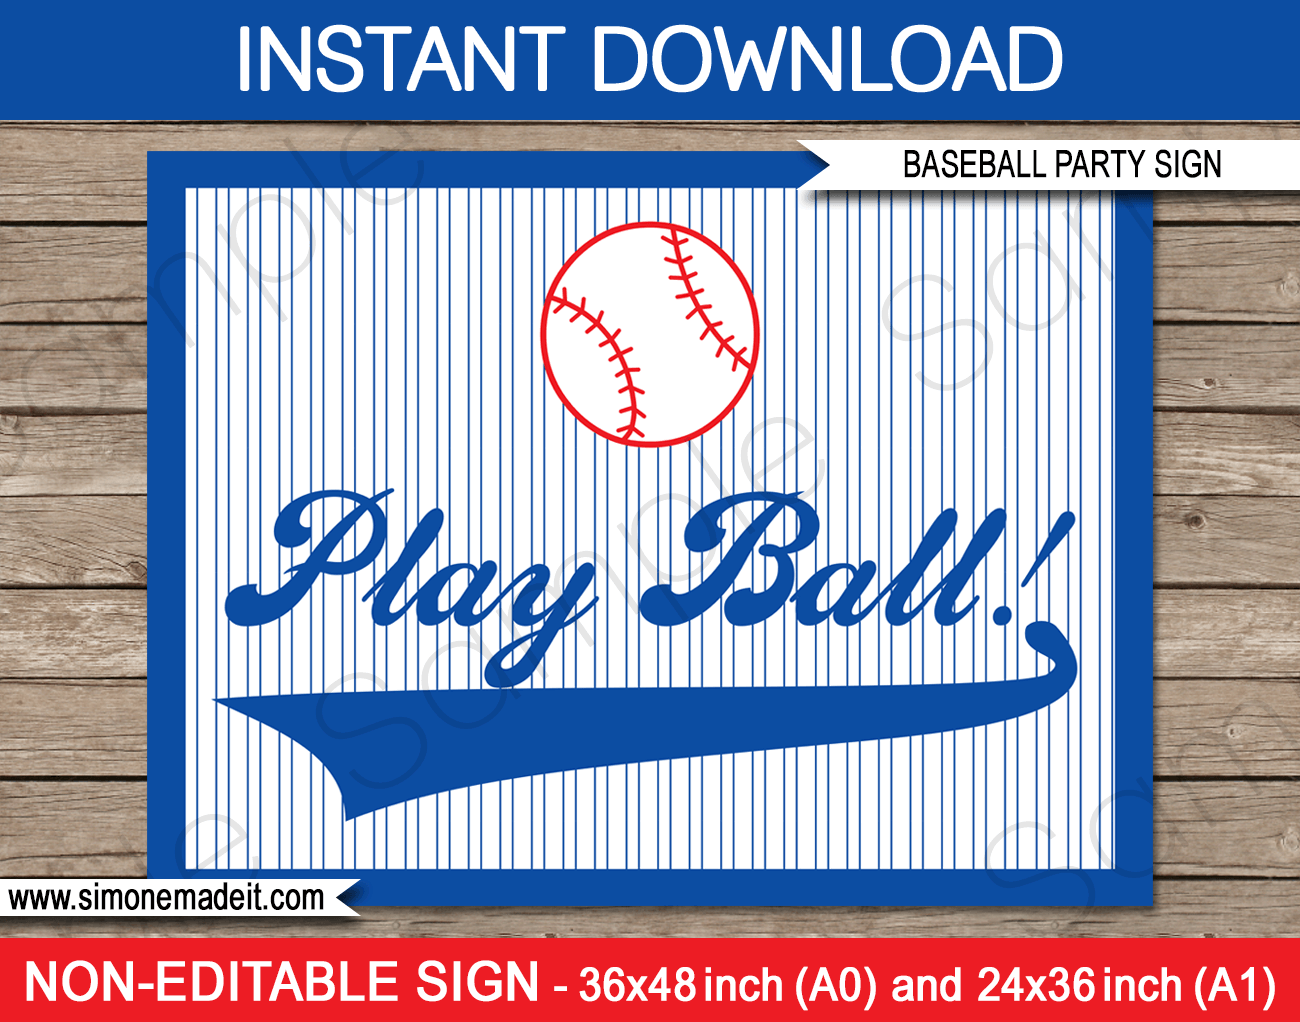 Baseball Party Backdrop Sign | Play Ball | Printable Template | 36x48 inches & 24x36 inches | A0 & A1 | $4.50 via SIMONEmadeit.com